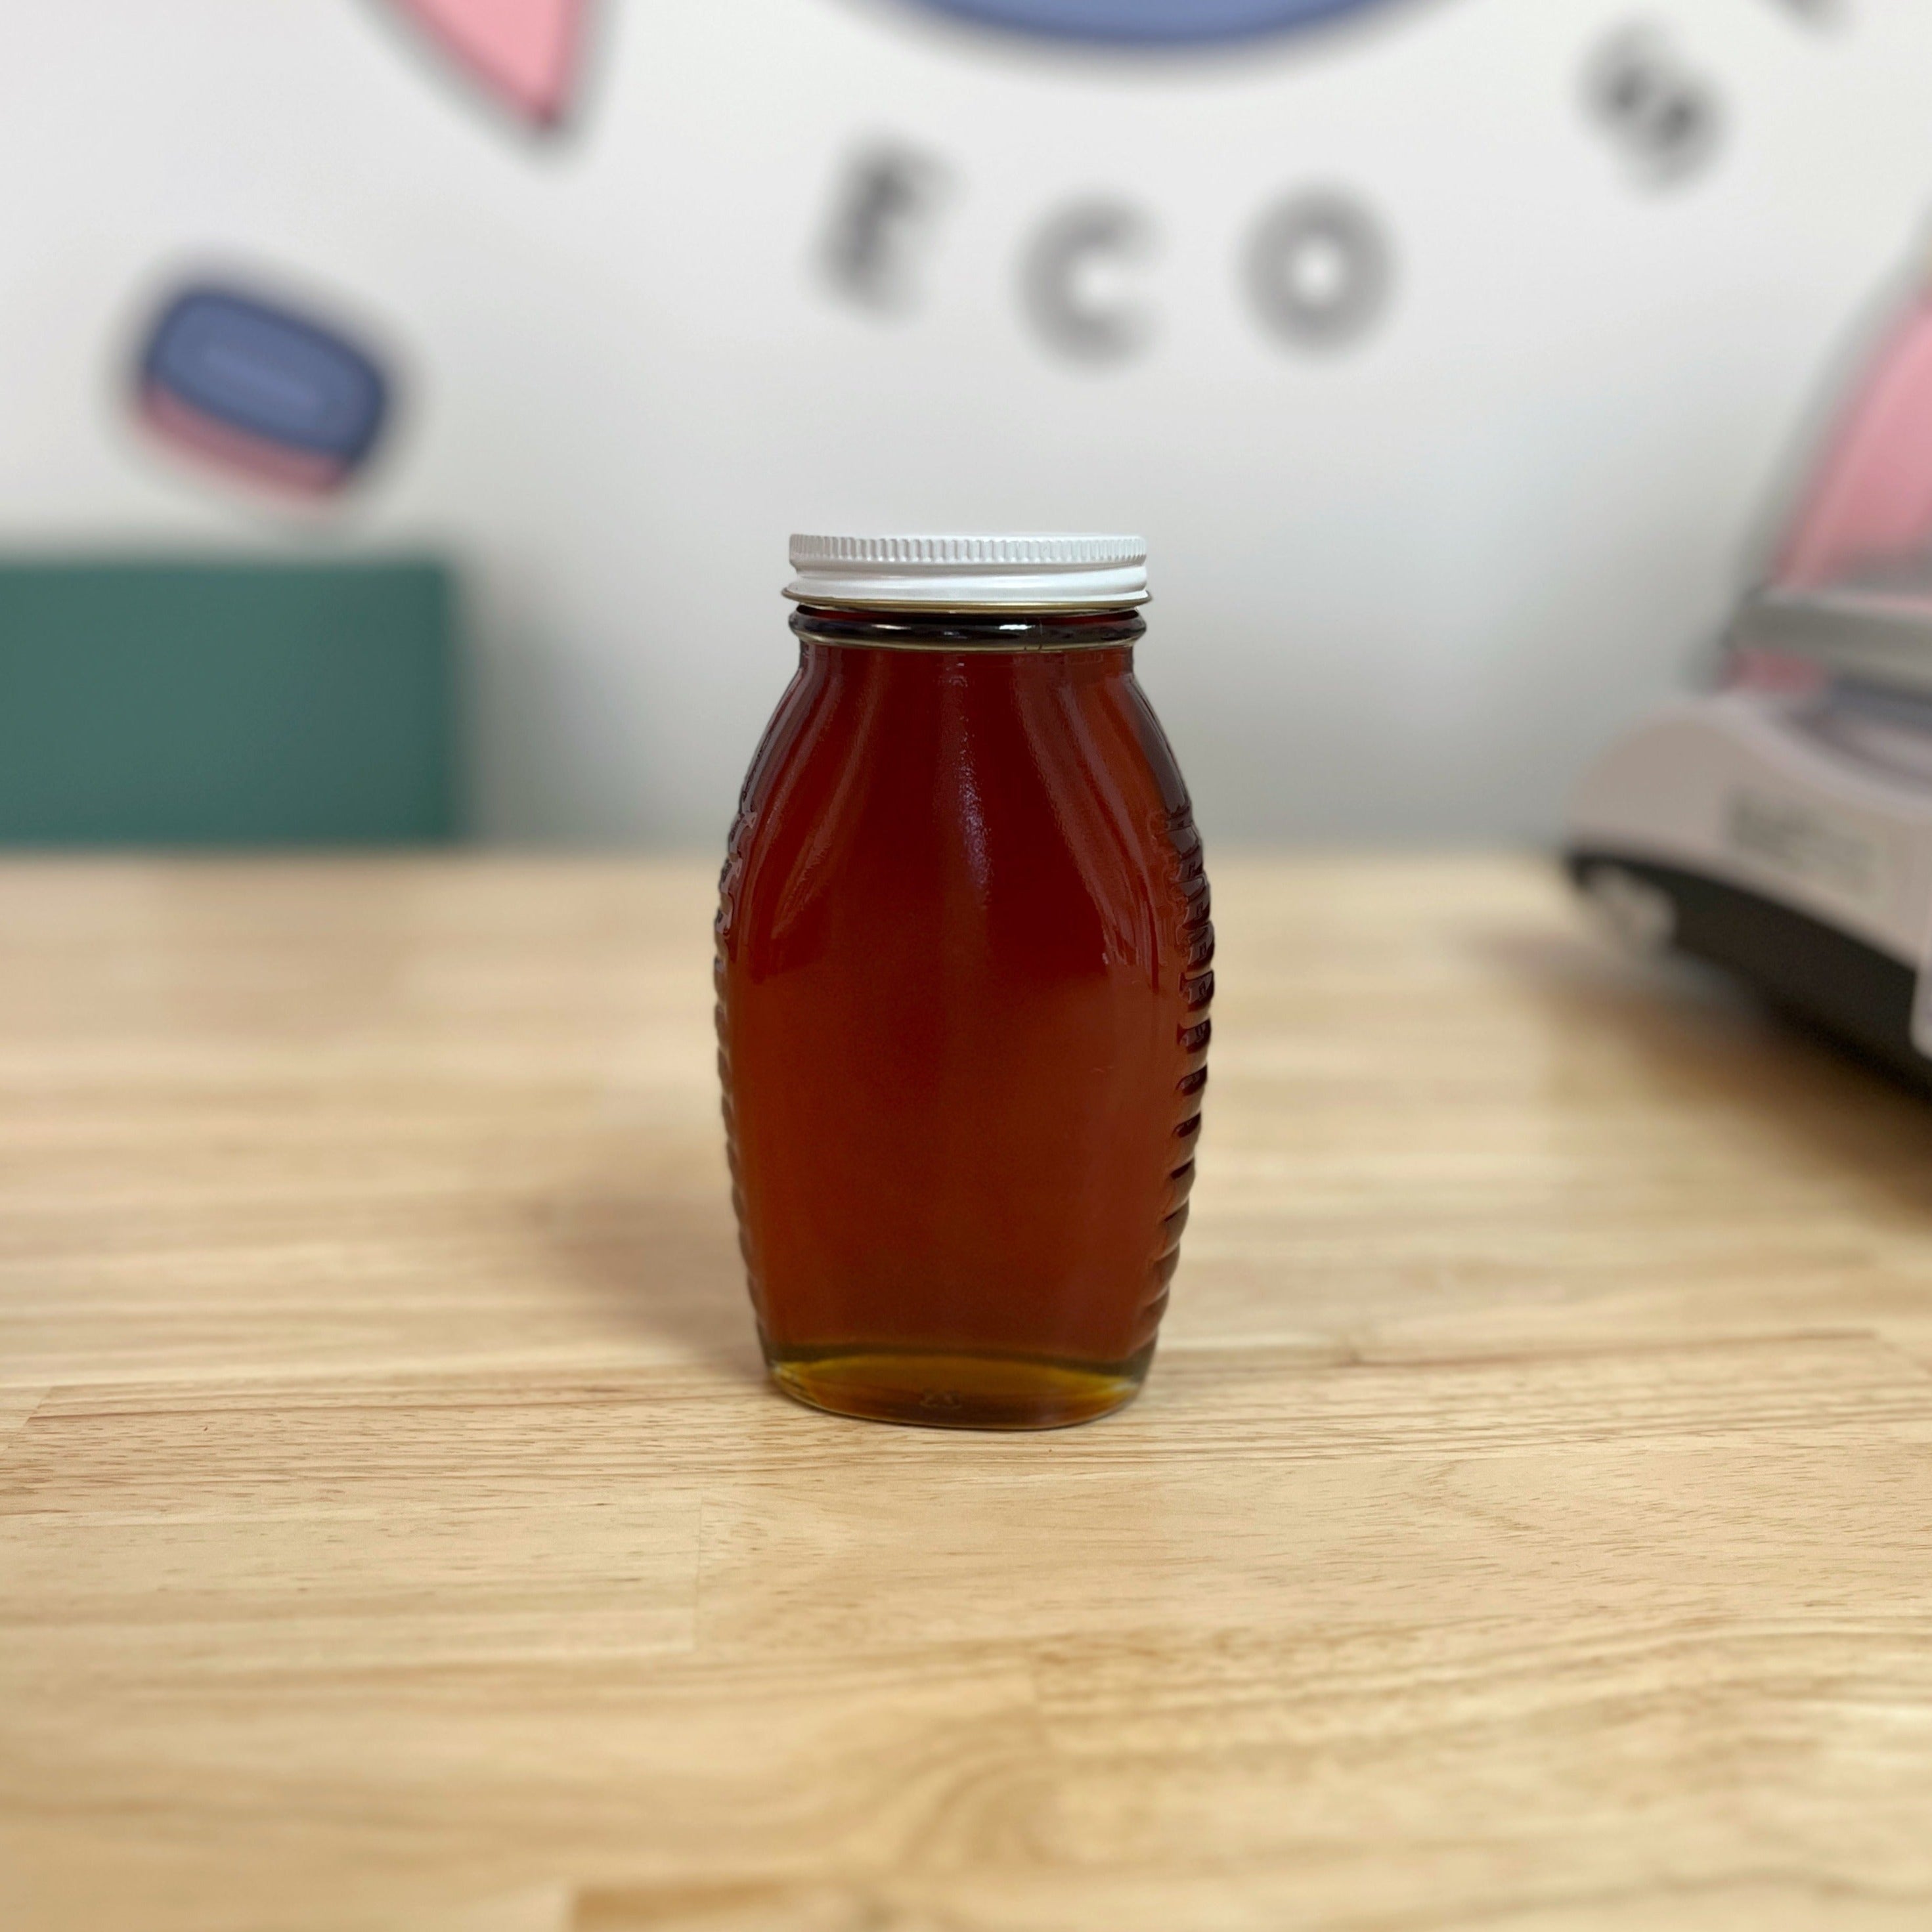 Bee Shore Honey | Raw Filtered Local Honey